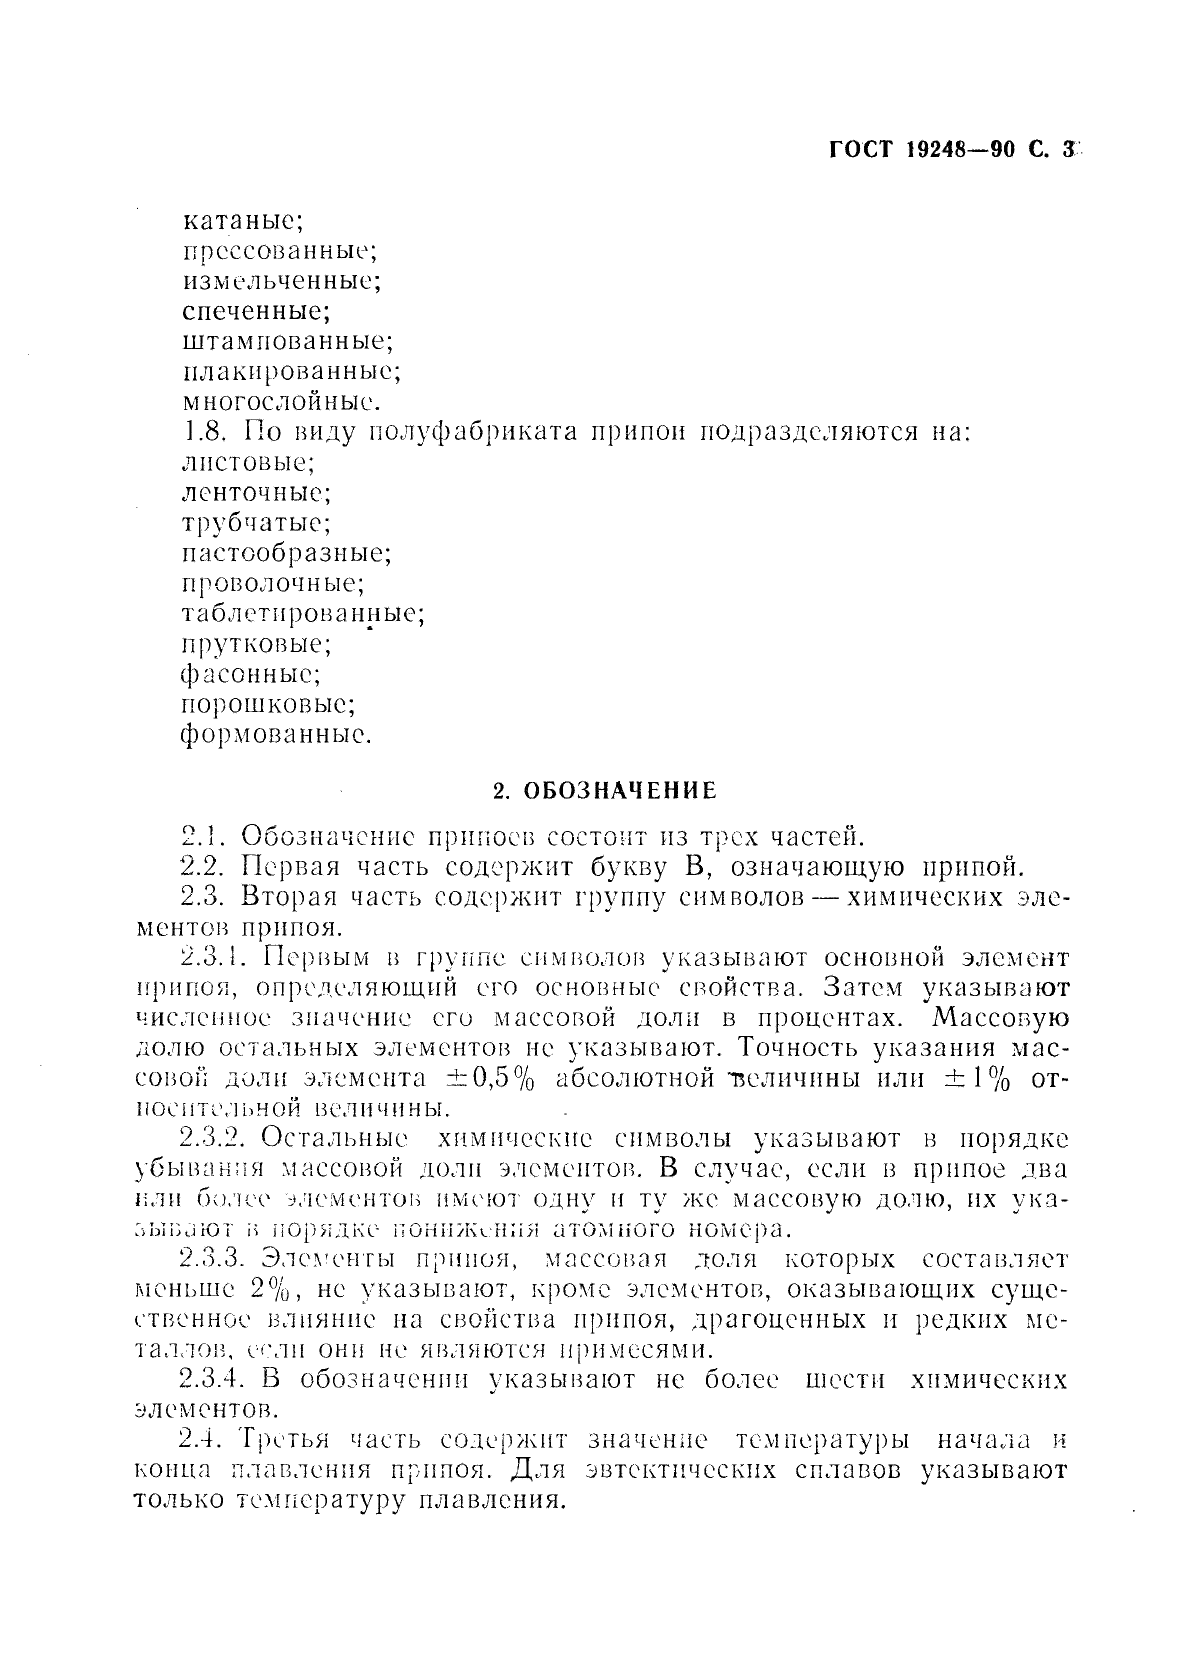 ГОСТ 19248-90 Припои. Классификация и обозначения (фото 4 из 7)